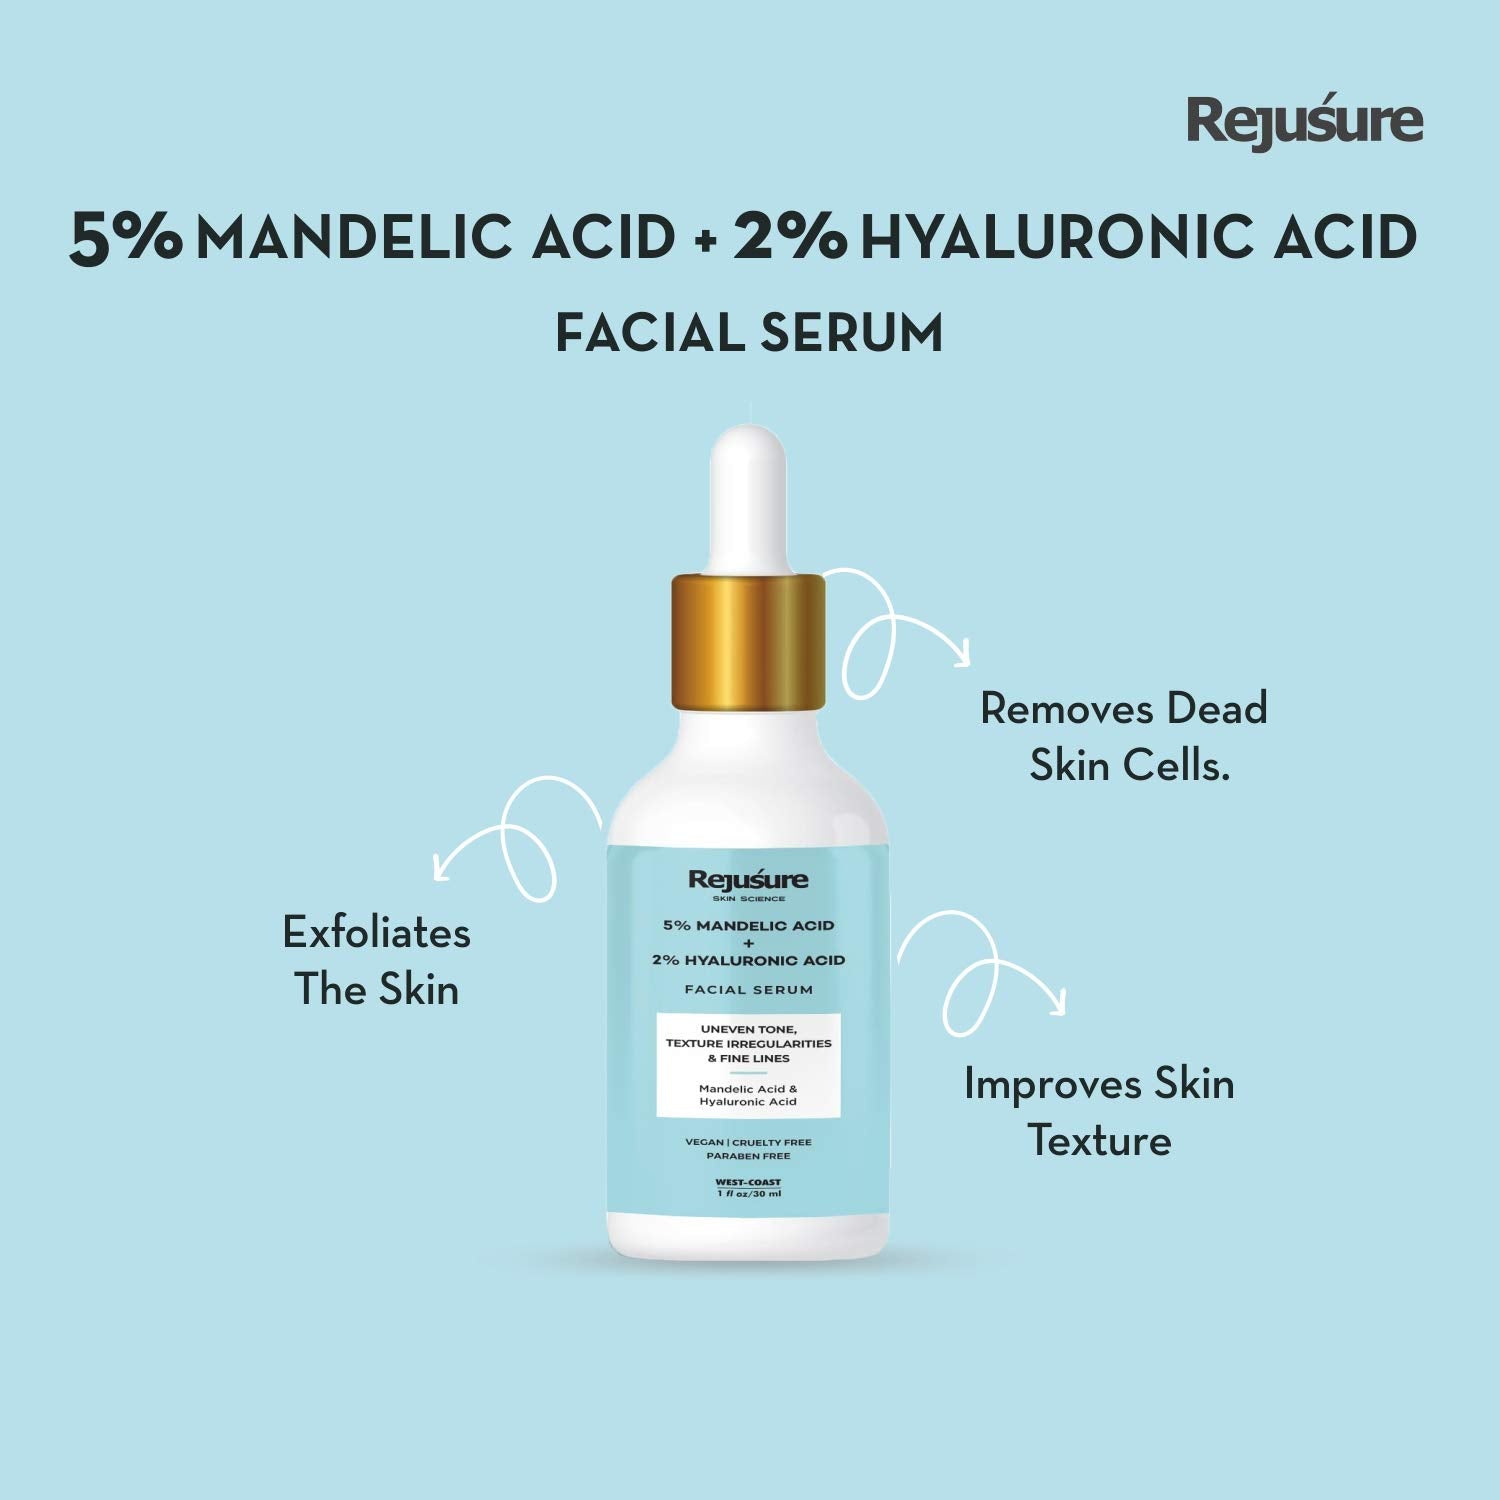 Rejusure Mandelic Acid 5% + Hyaluronic Acid 2% Face Serum for Uneven Tone, Texture Irregularities & Fine Line – 30 ml